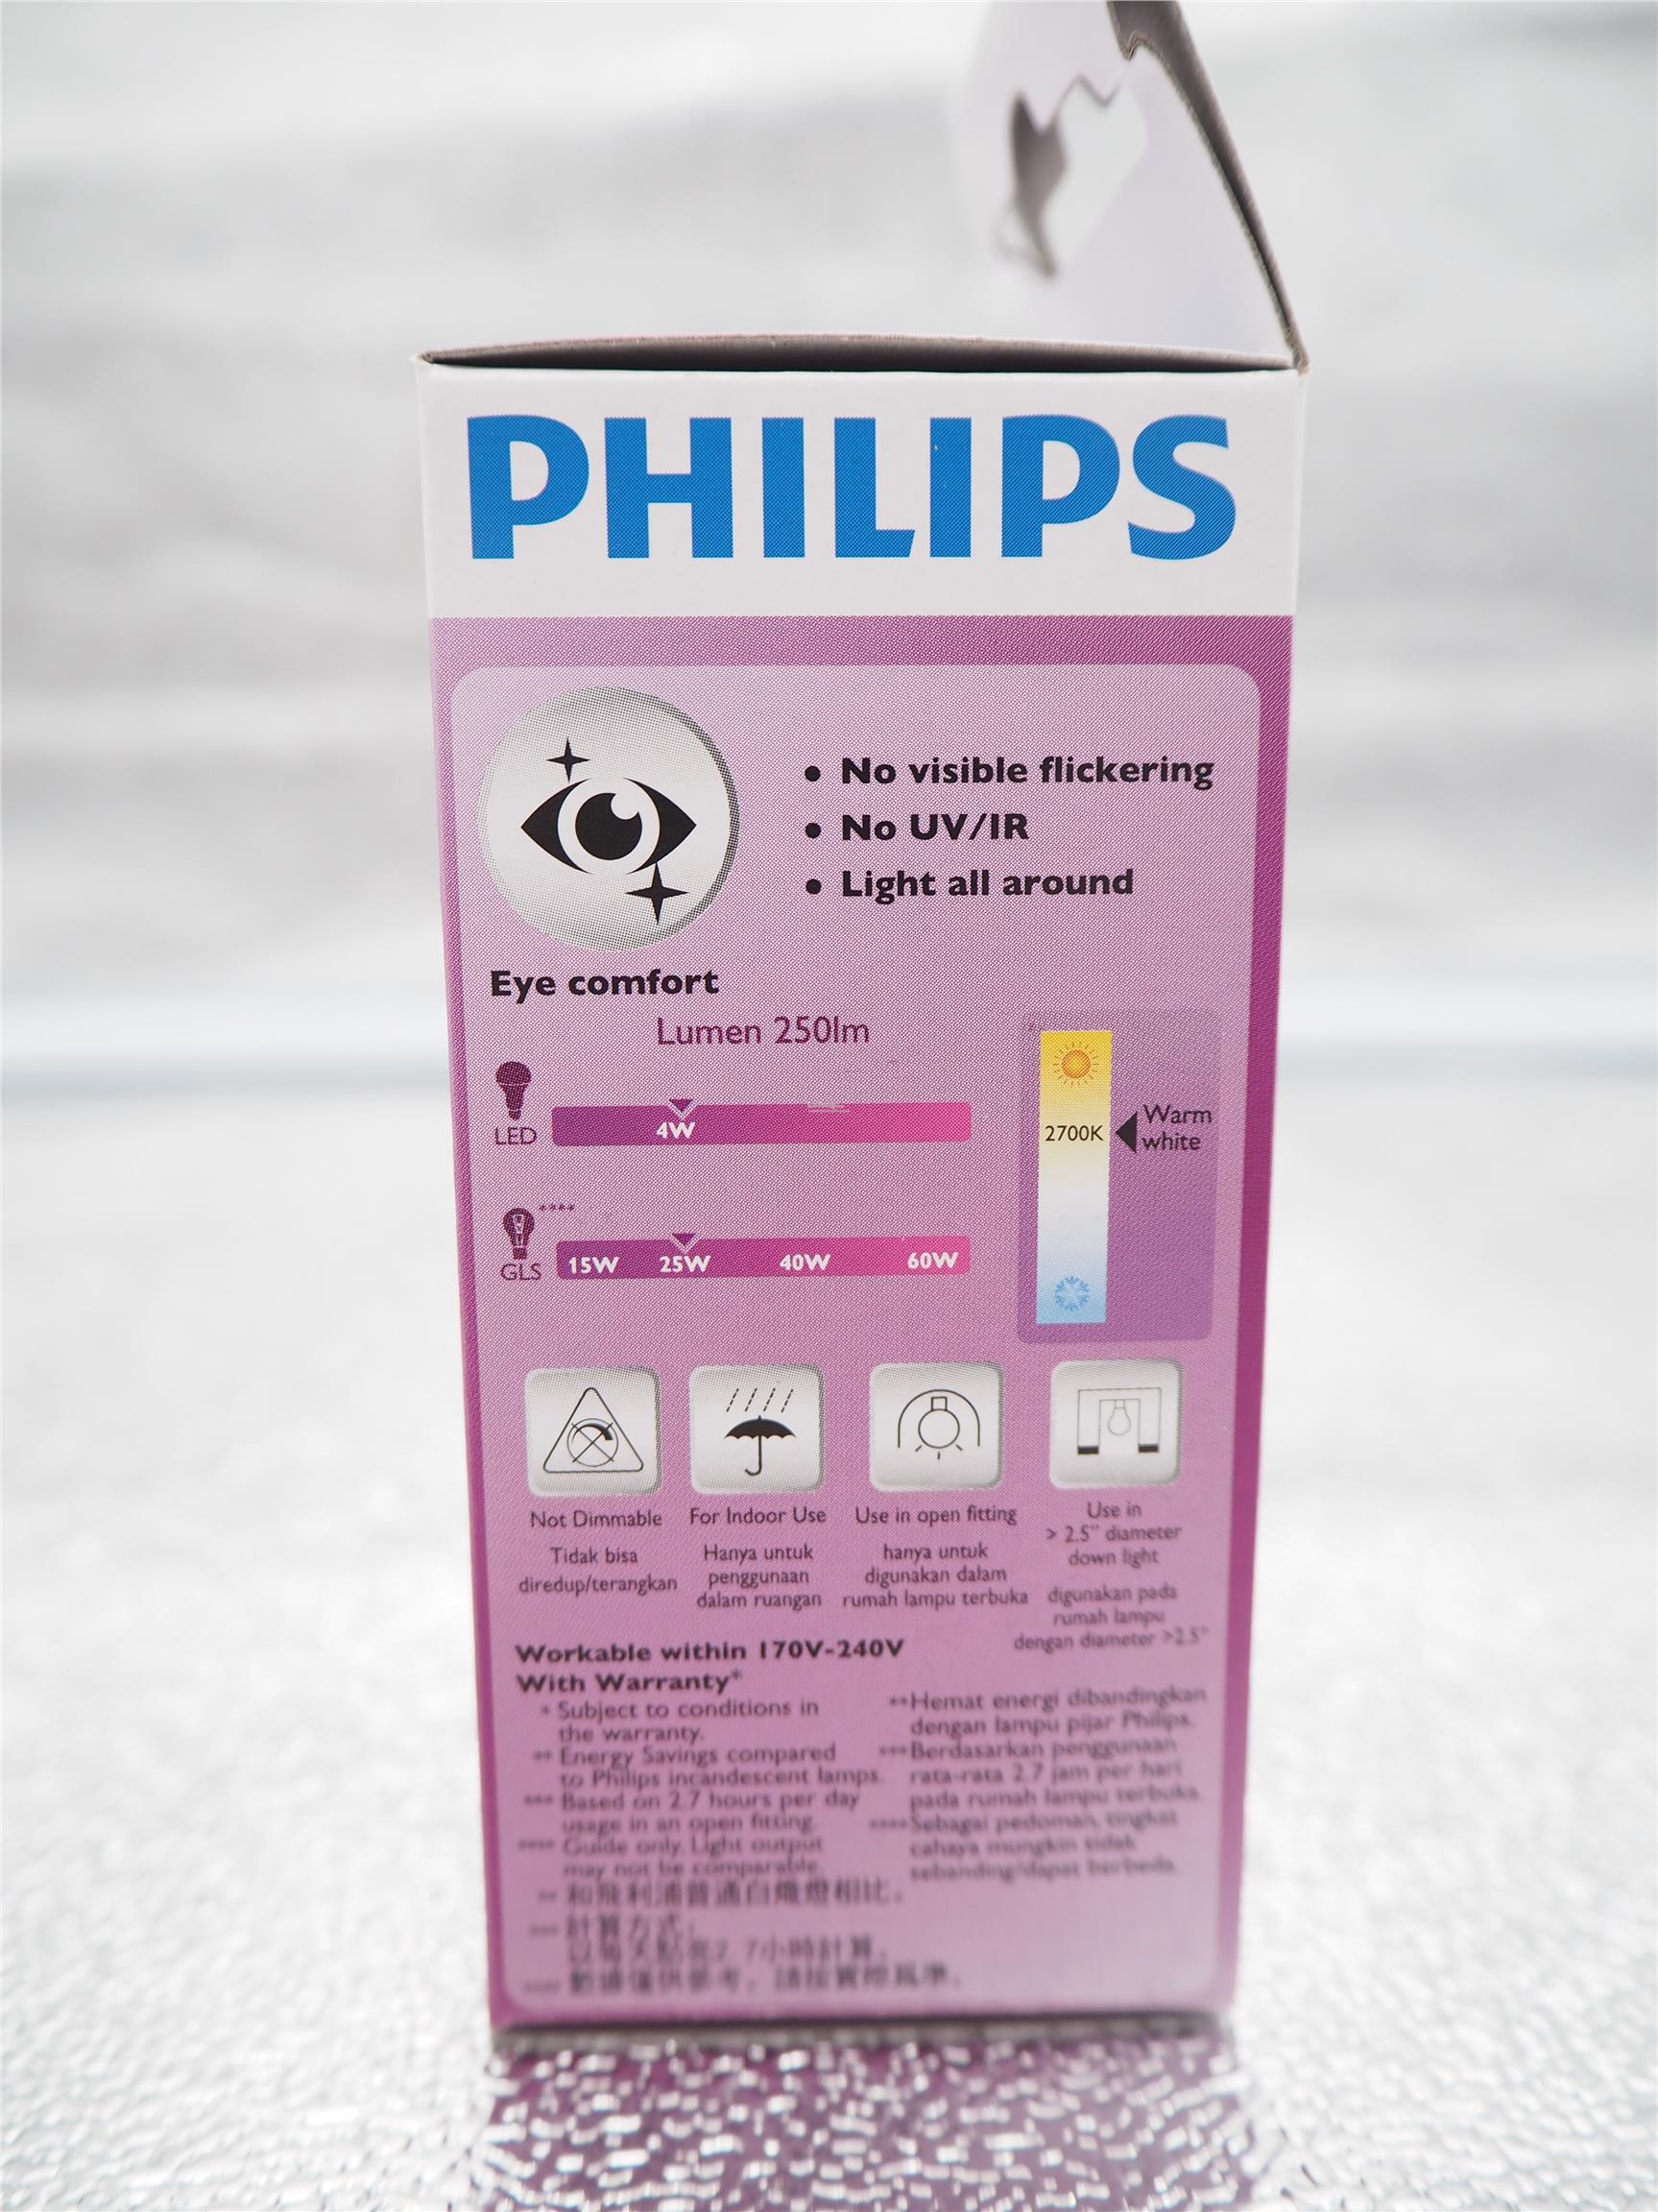 PHILIPS 4W LED LUSTRE-WARM WHITE